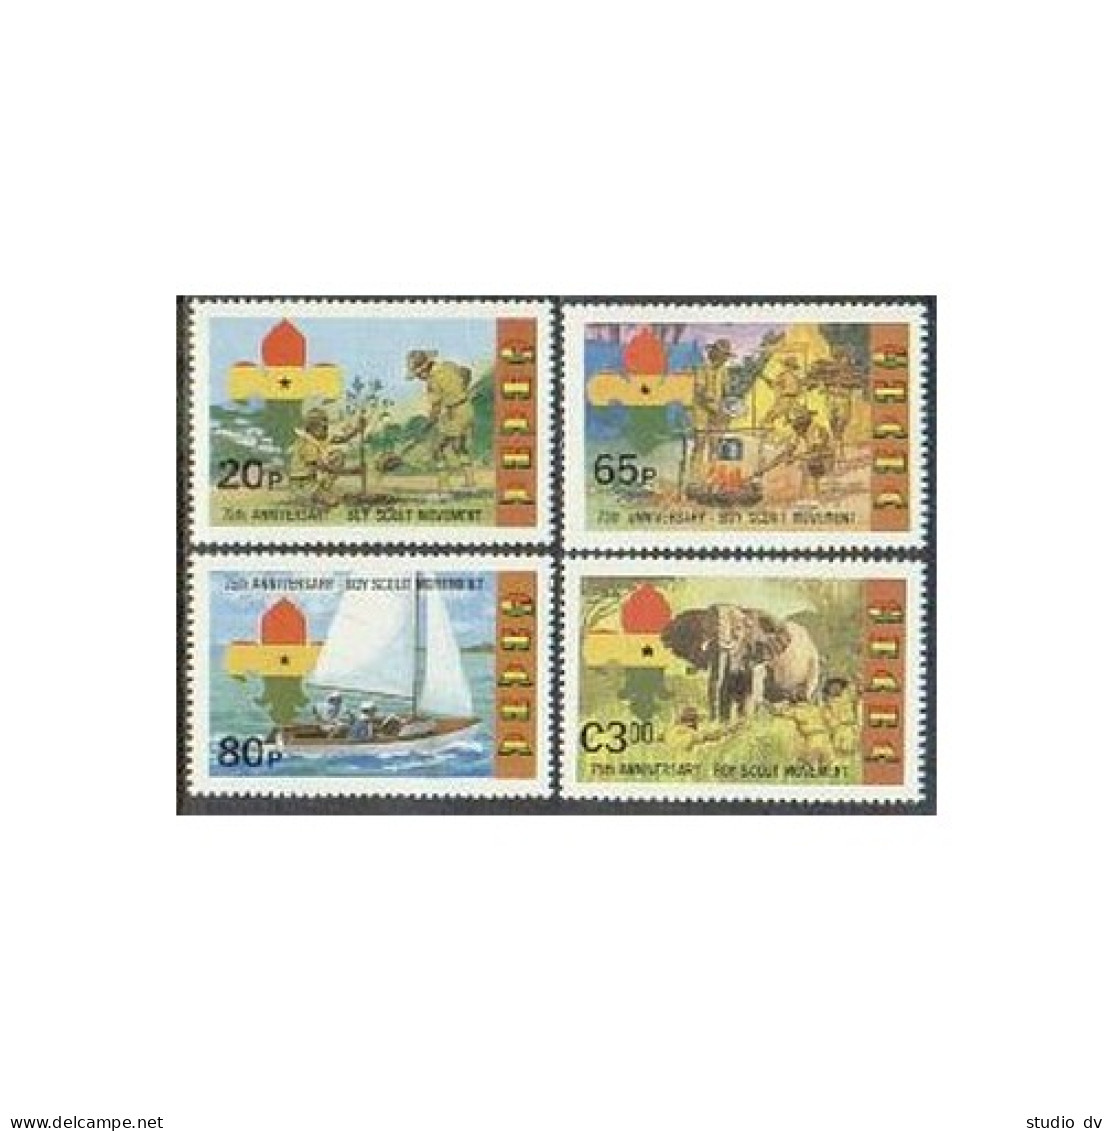 Ghana 794-797,MNH.Michel 940-943. Scouting Year 1982,Sailing Boat,Elephant. - Préoblitérés